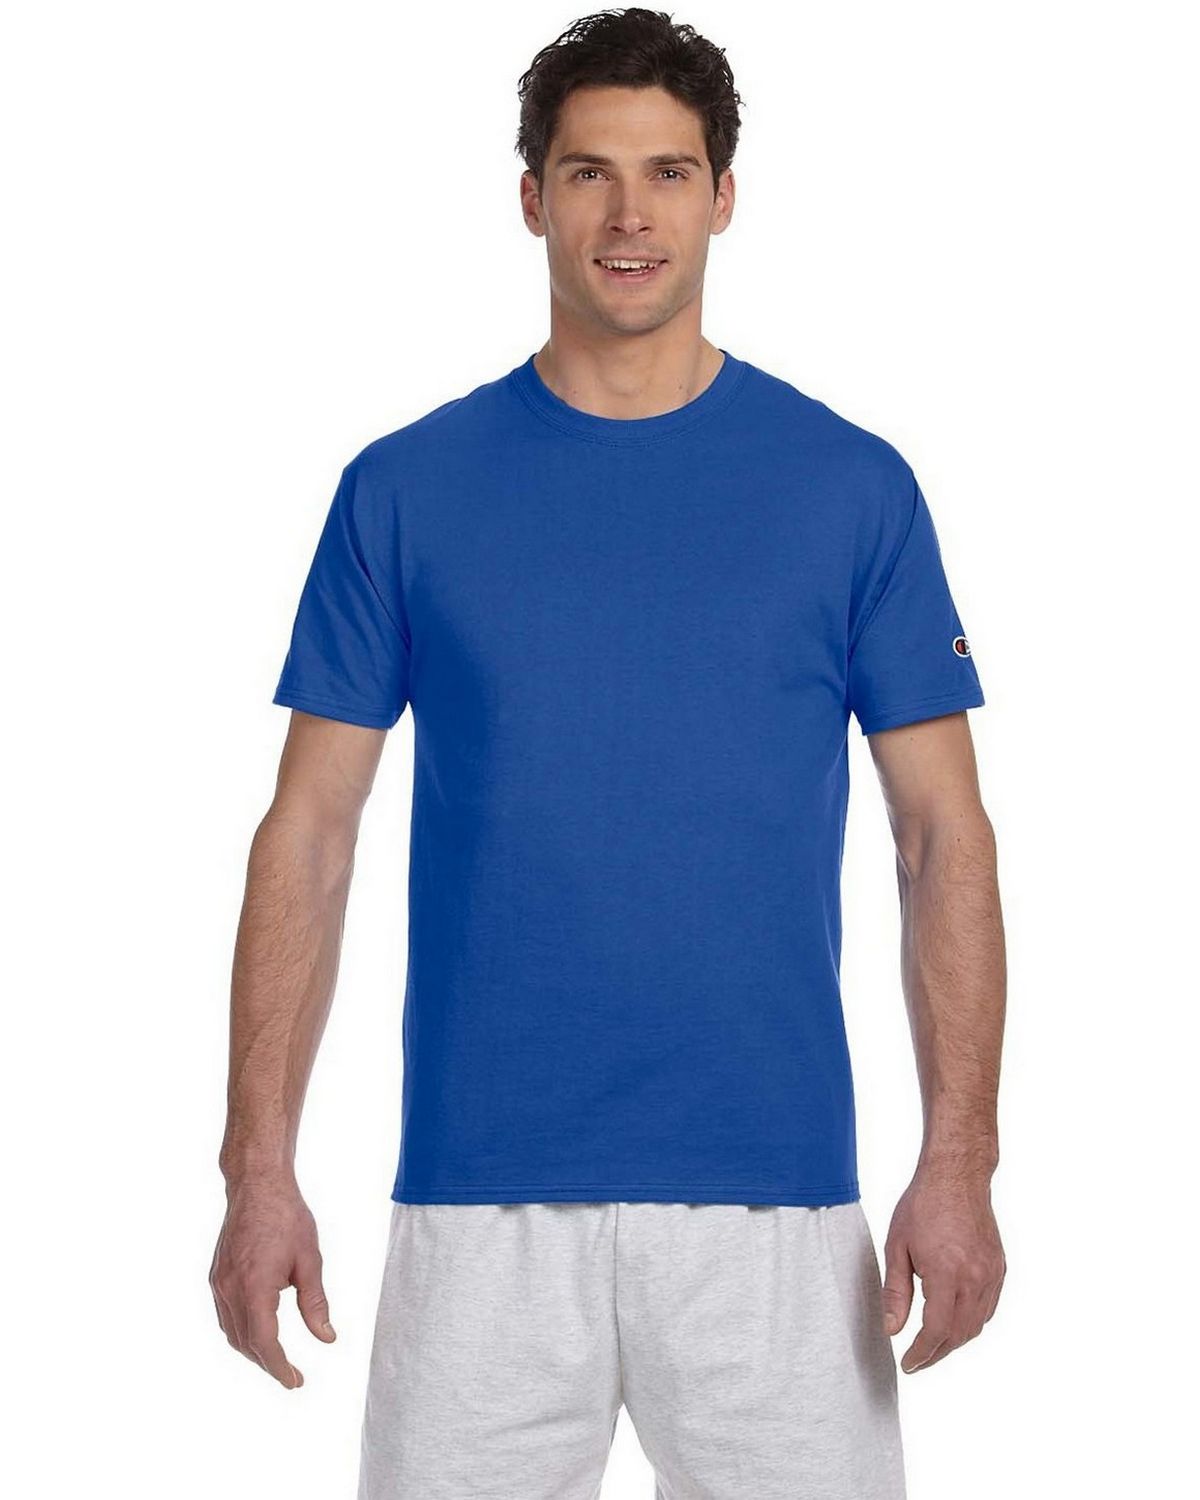 Champion T525C 6.1 oz. Cotton Tagless T-Shirt - ApparelnBags.com